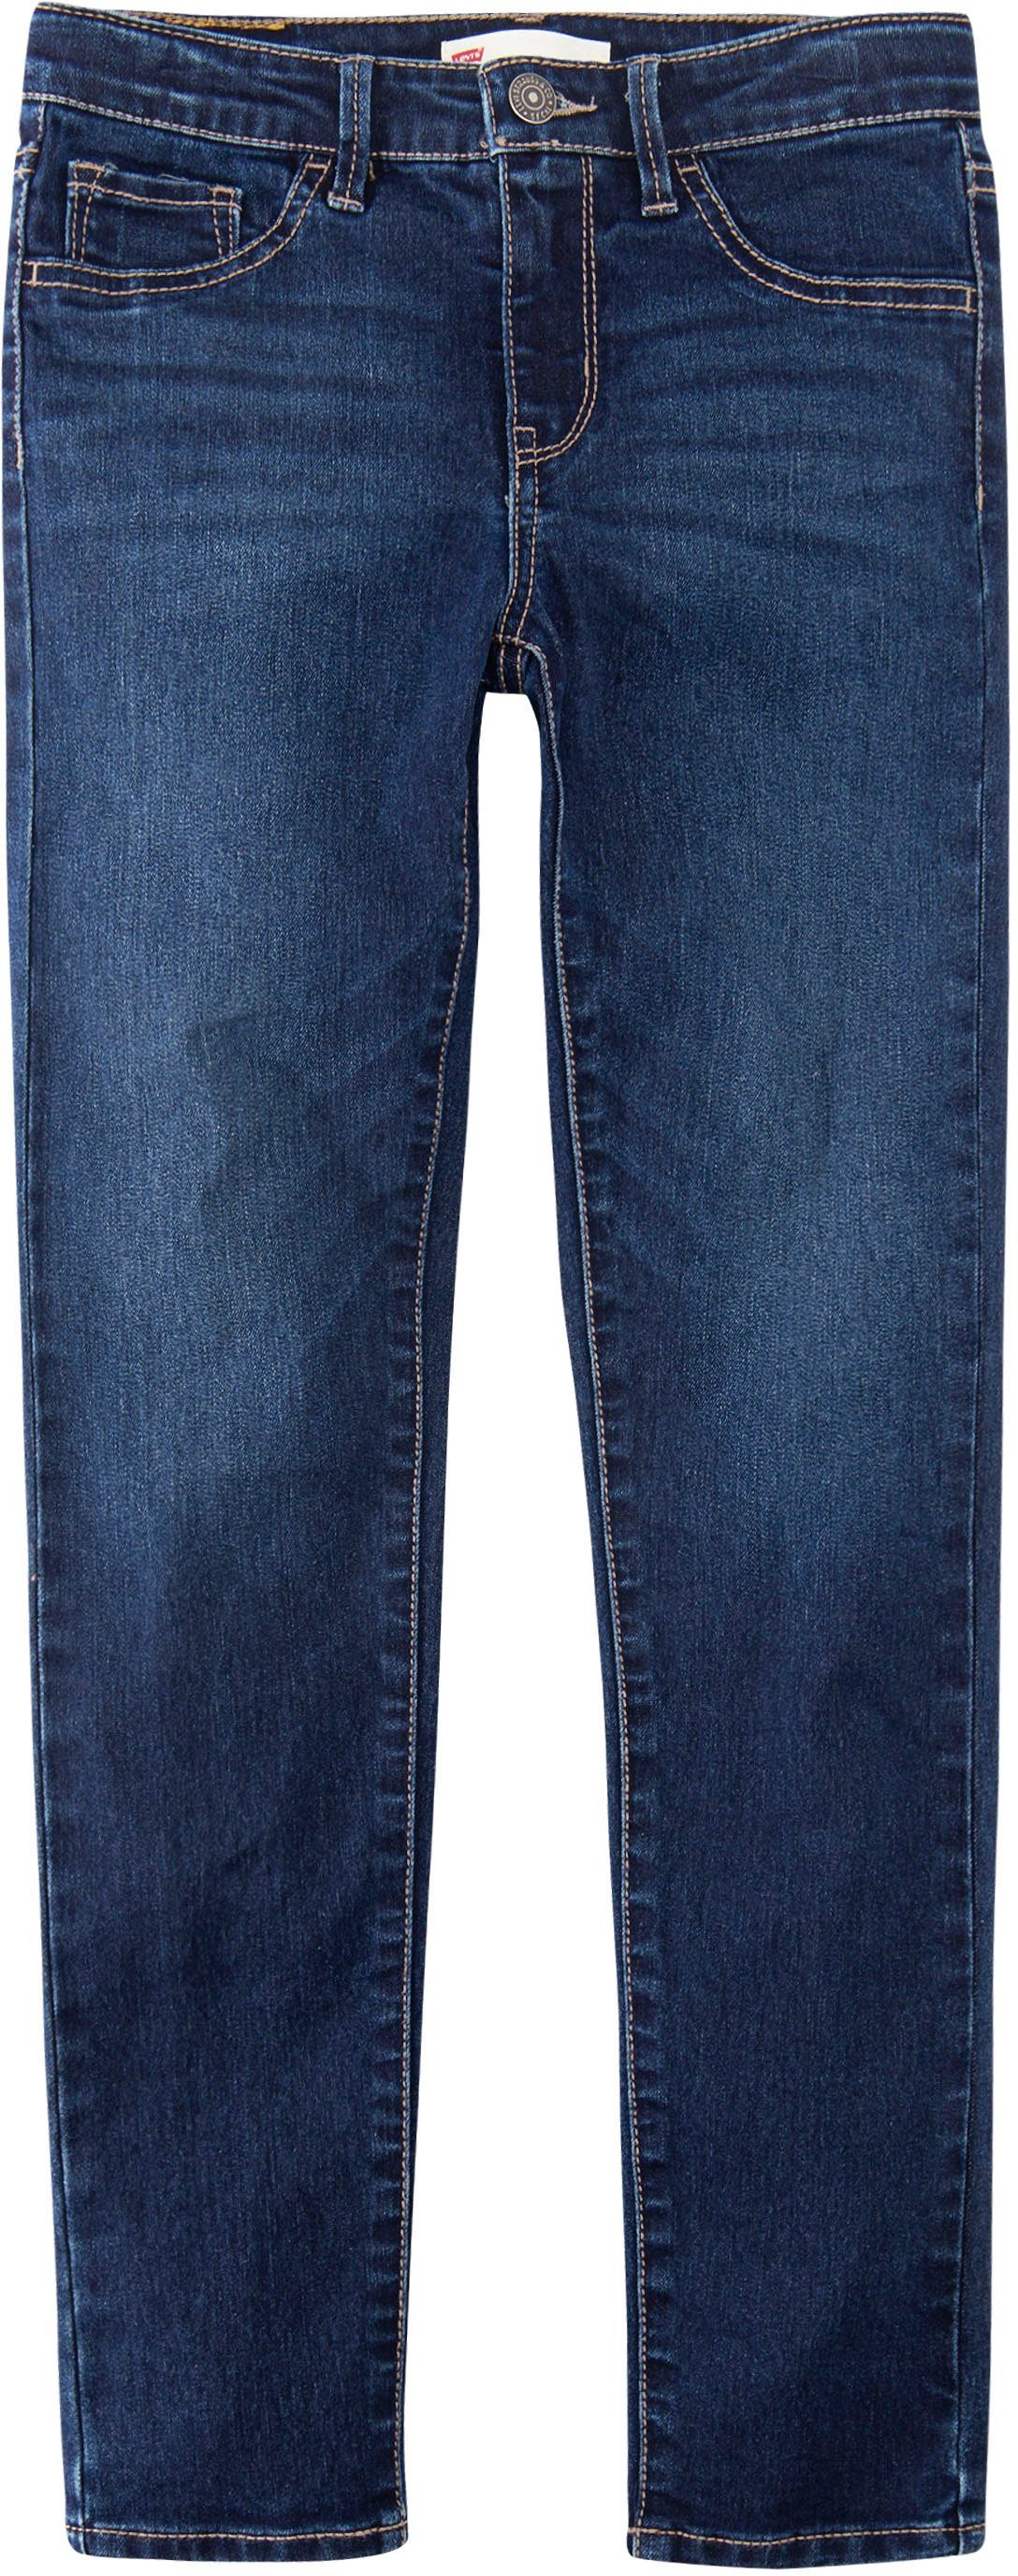 Levi's® Kids Stretch-Jeans used FIT dark for denim GIRLS SUPER 710™ blue SKINNY JEANS